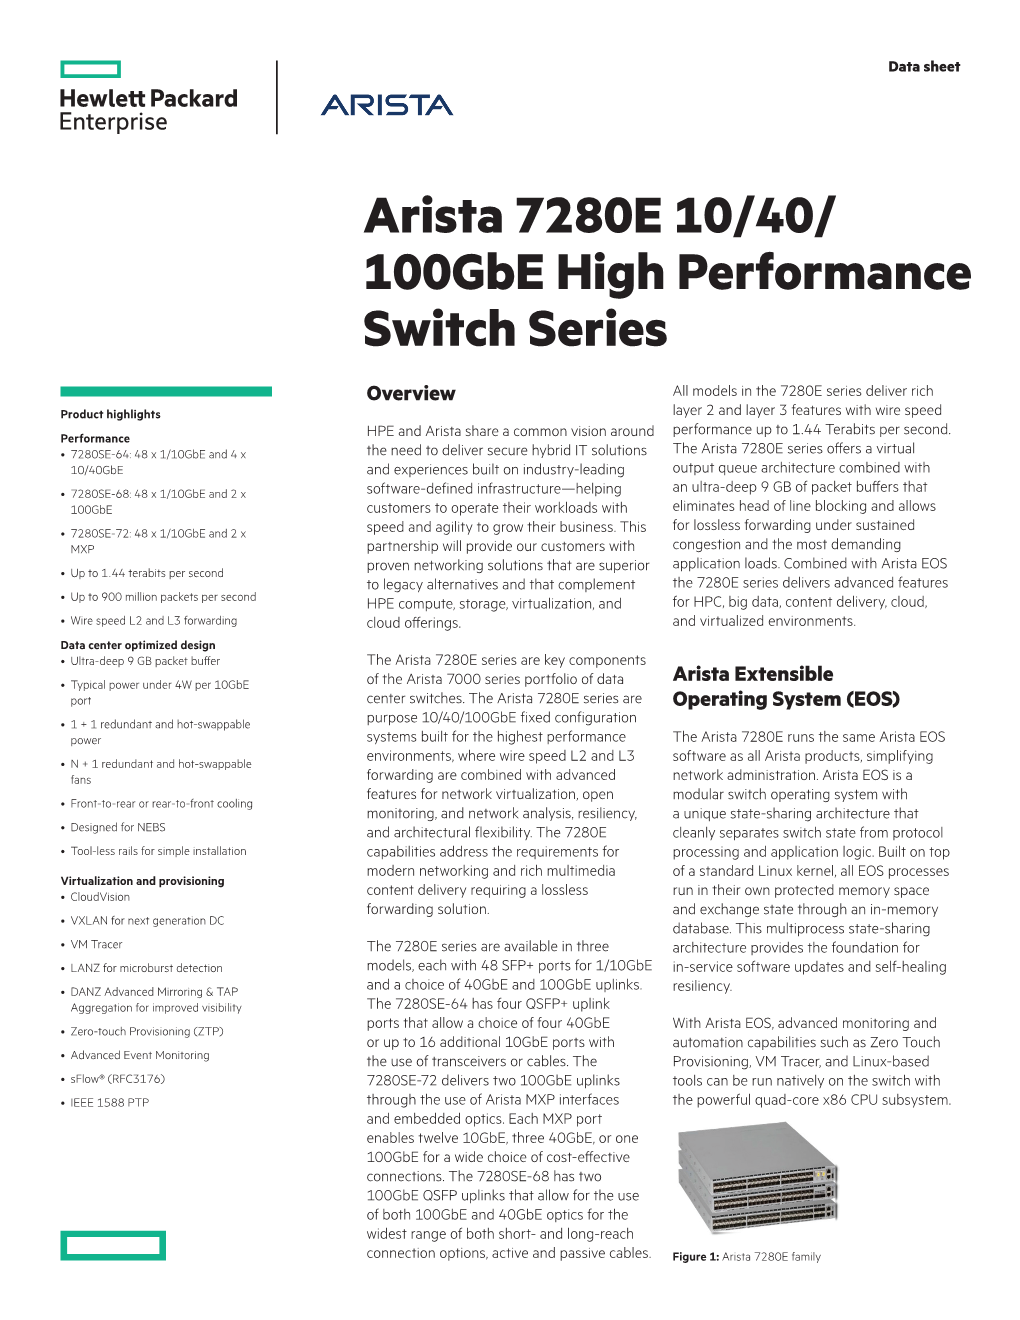 Arista 7280E 10/40/100Gbe High Performance Switch Series